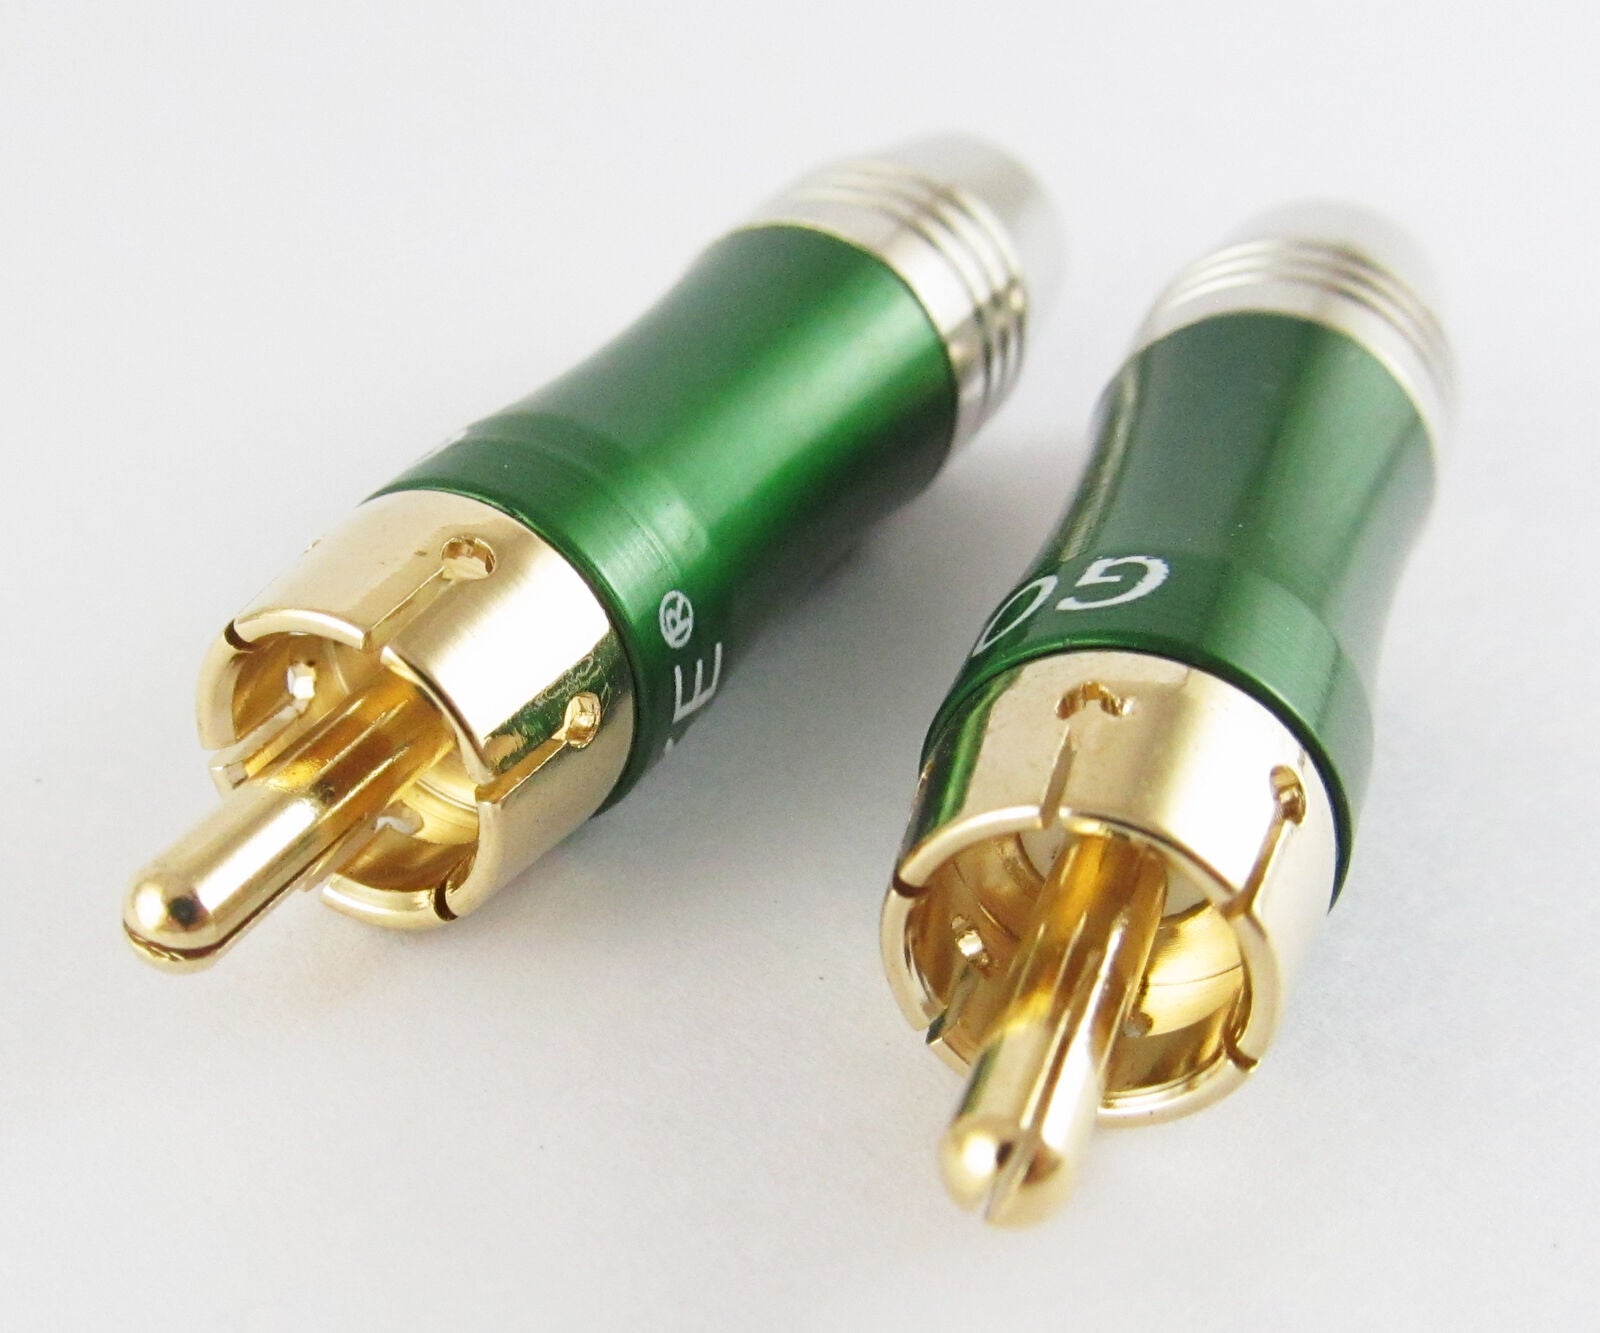 1pcs Green RCA plug with aluminum housing copper plug A/V Audio Video connector